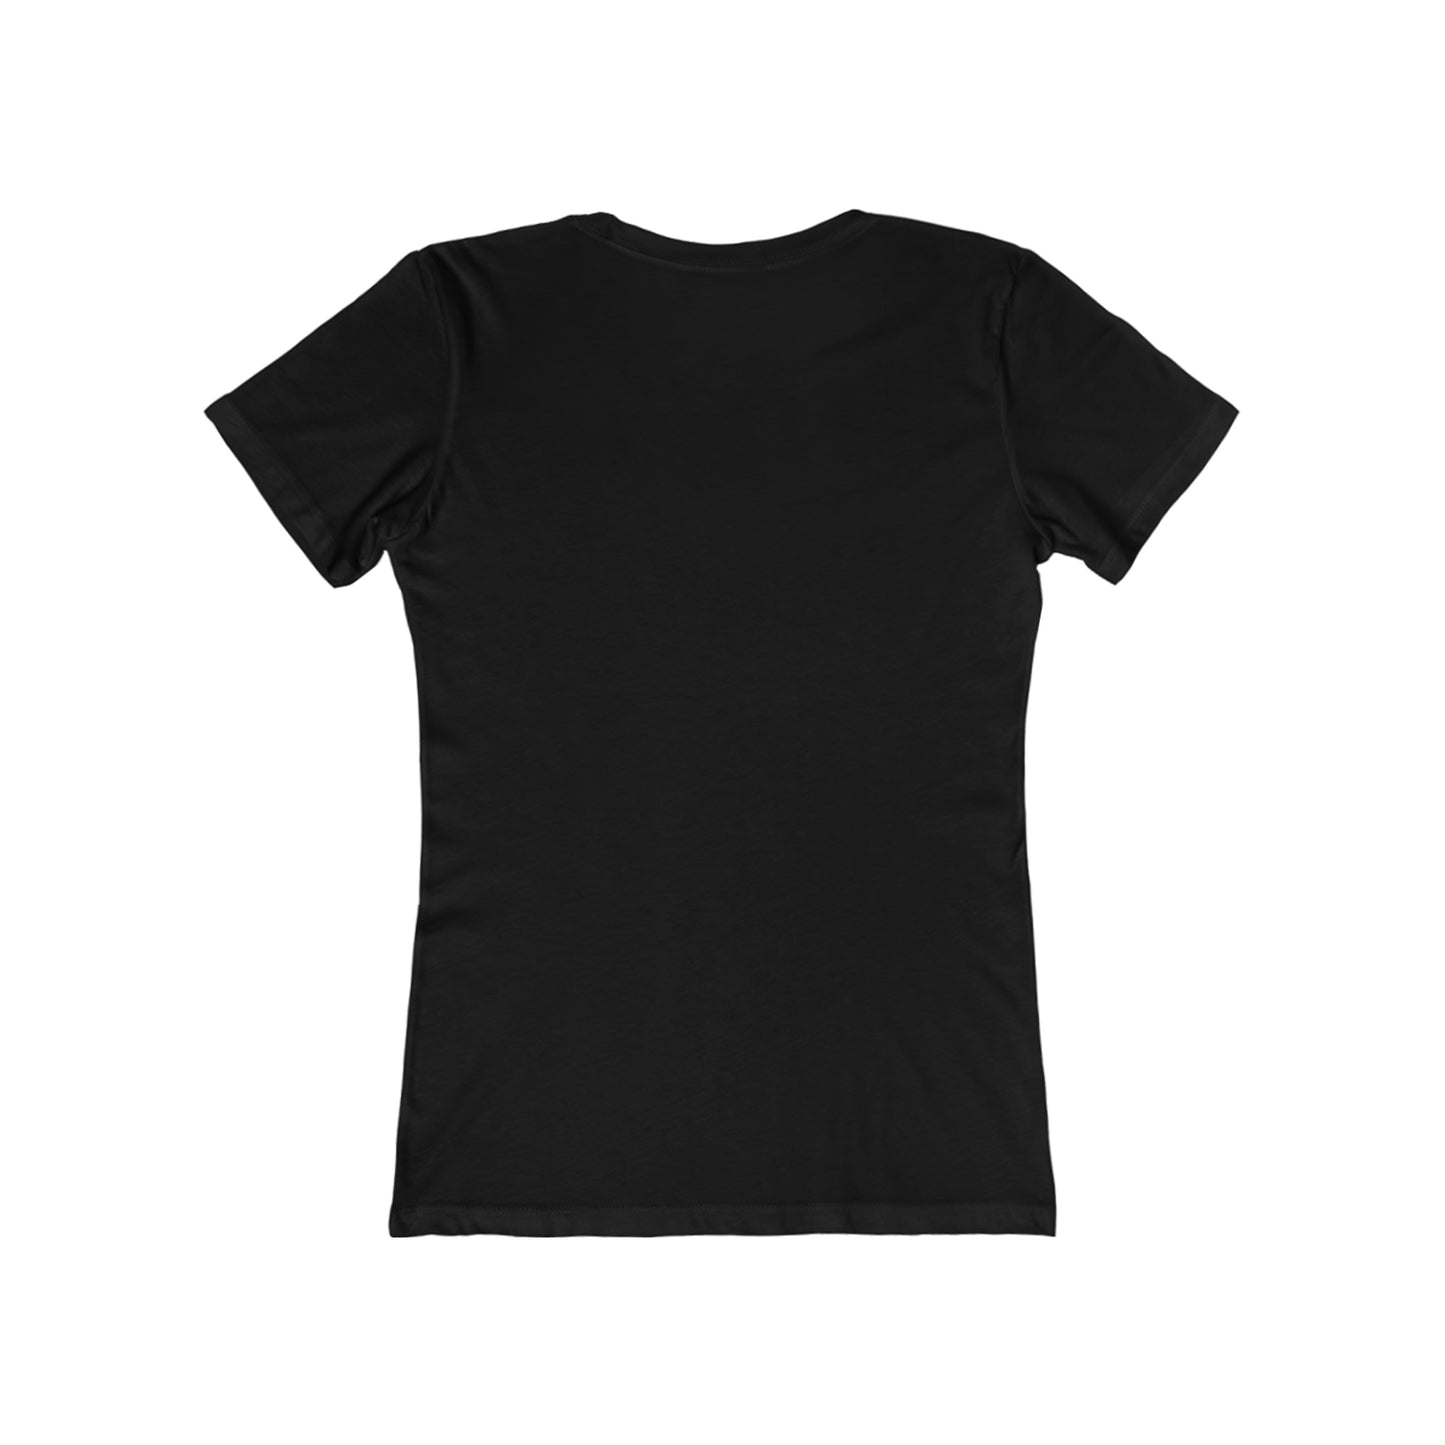 Trapezoid - Women's T-Shirt